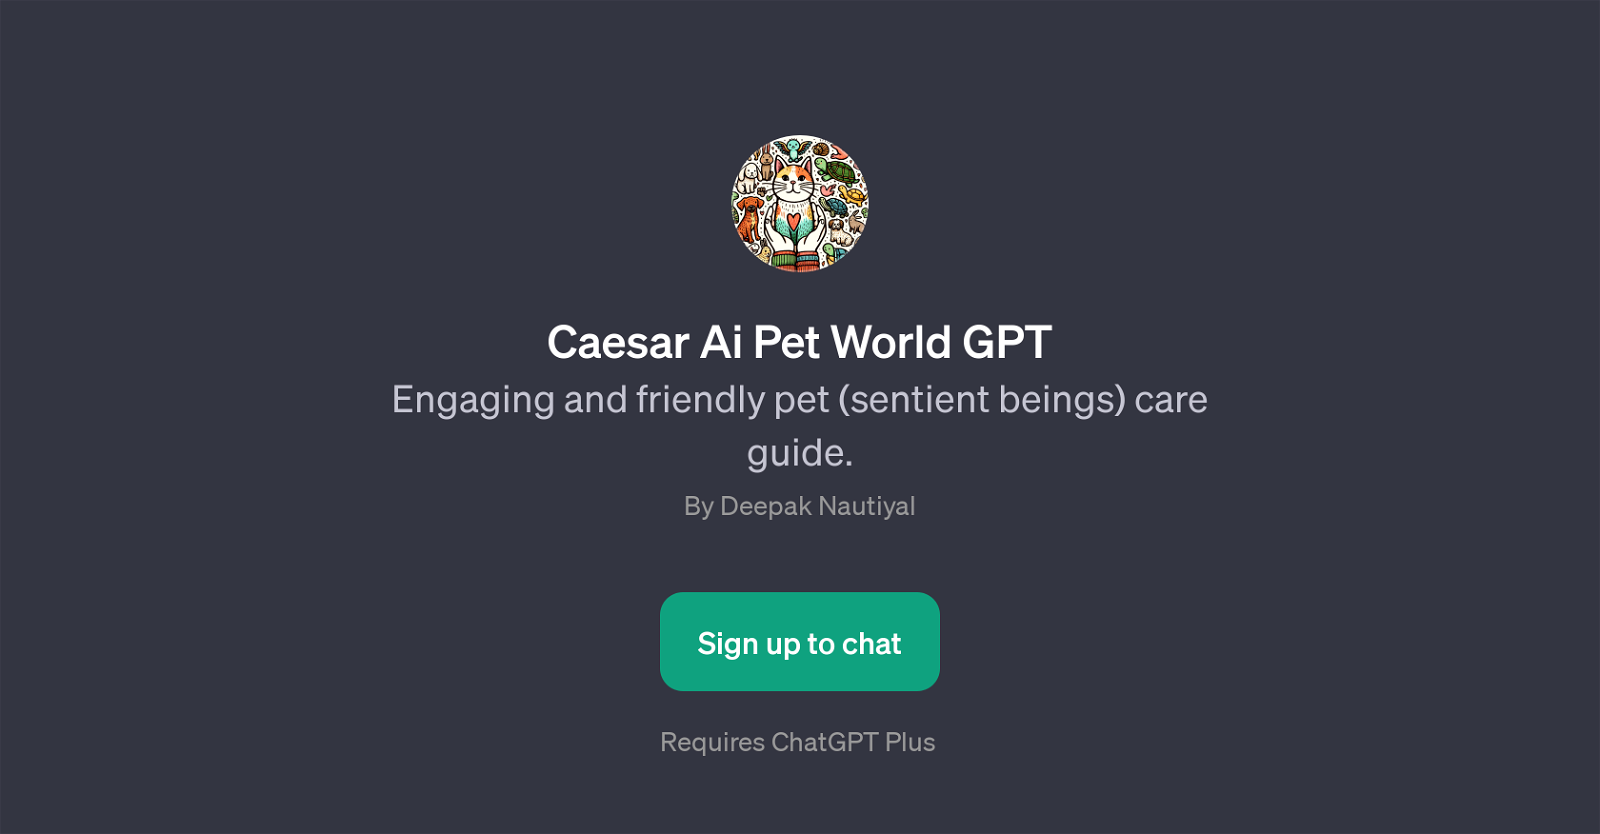 Caesar Ai Pet World GPT website